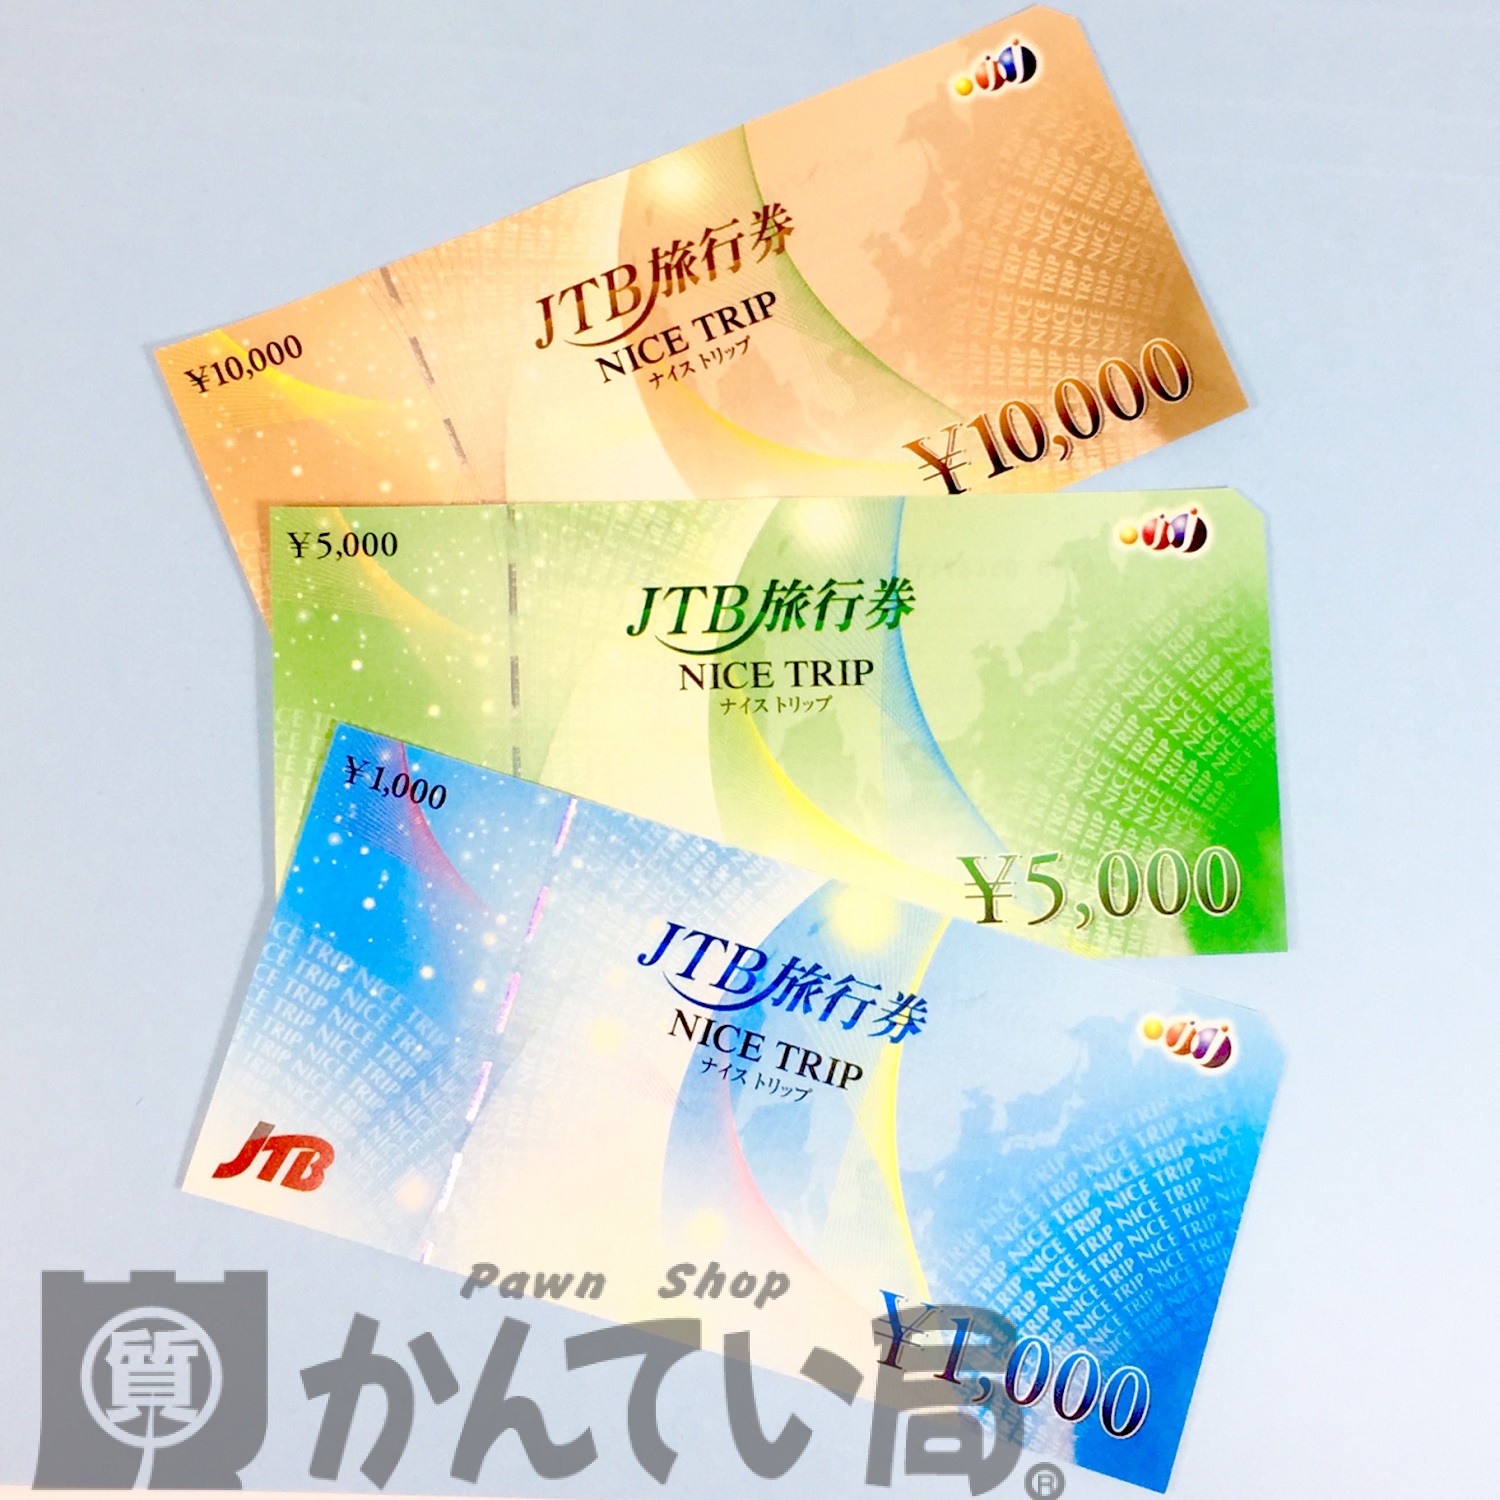 JTB ナイストリップ 旅行券 3万円 - 北海道のその他